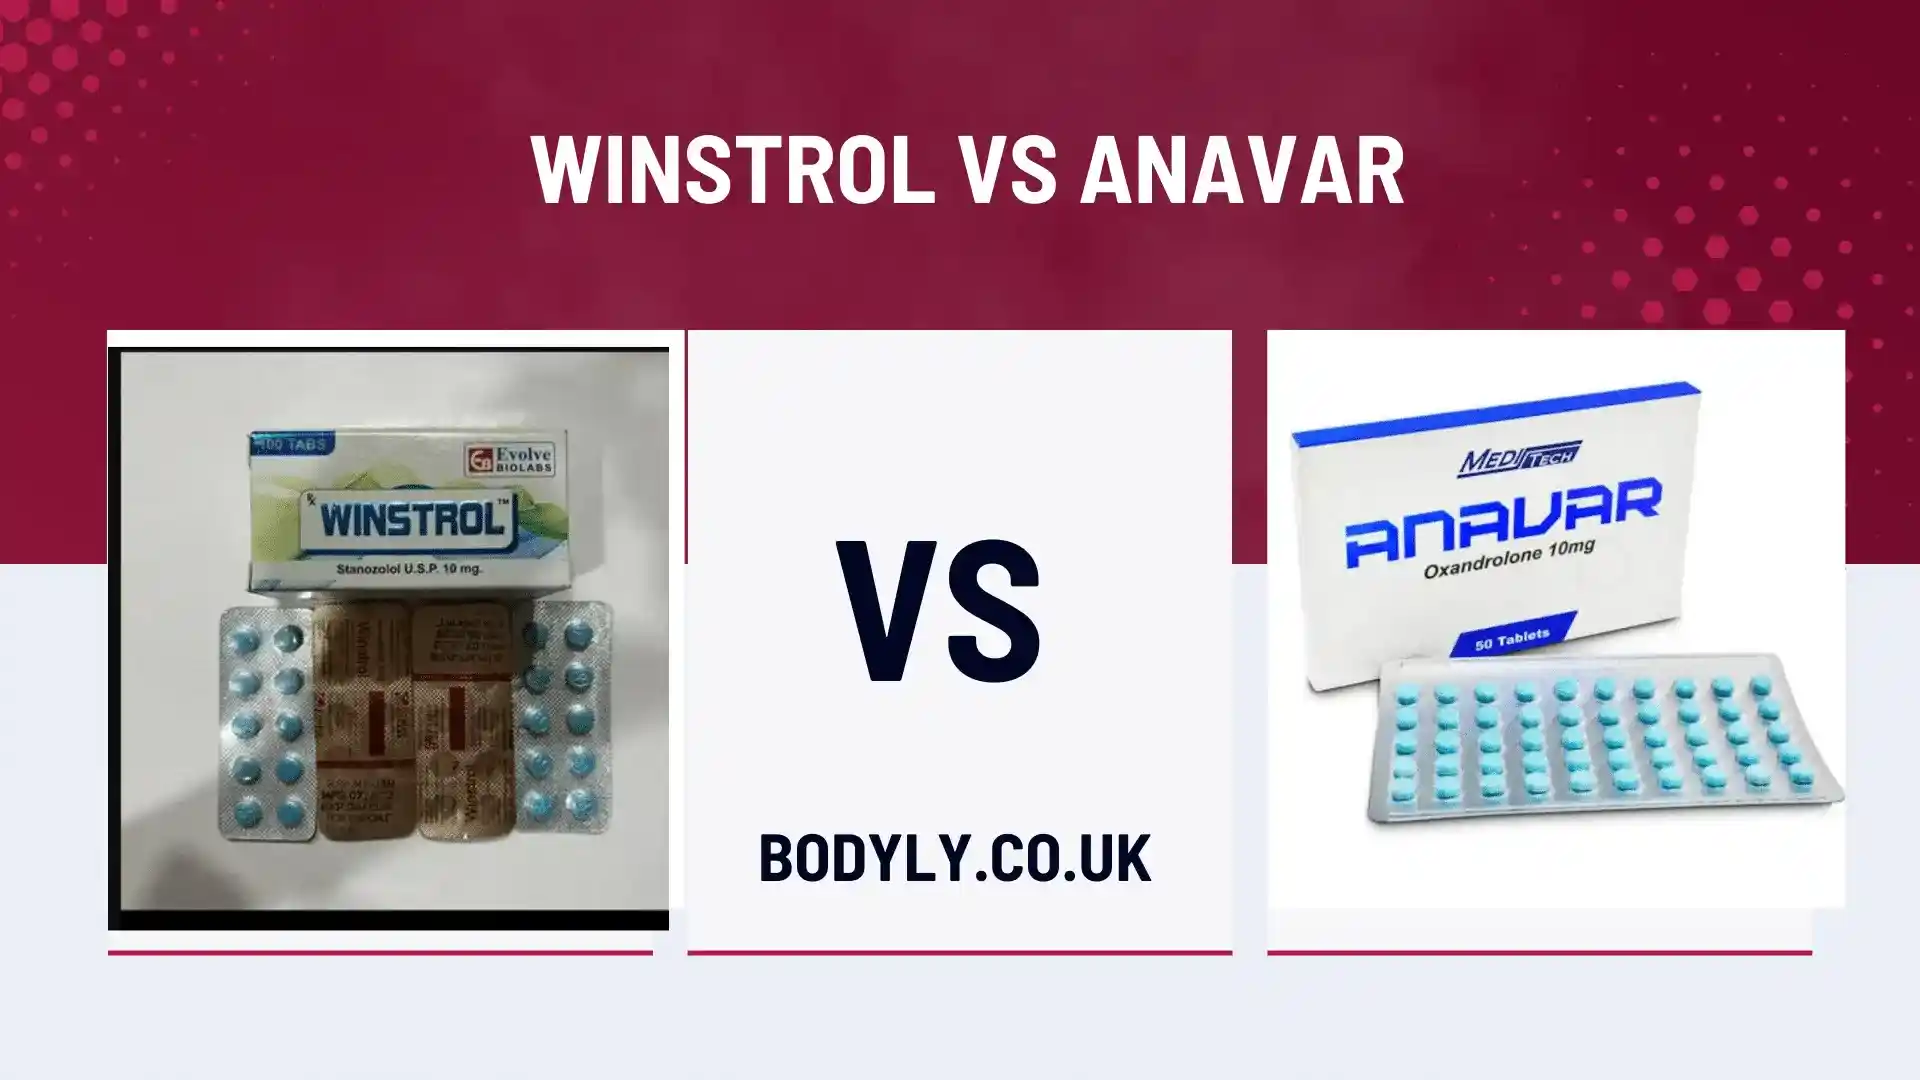 Winstrol vs Anavar